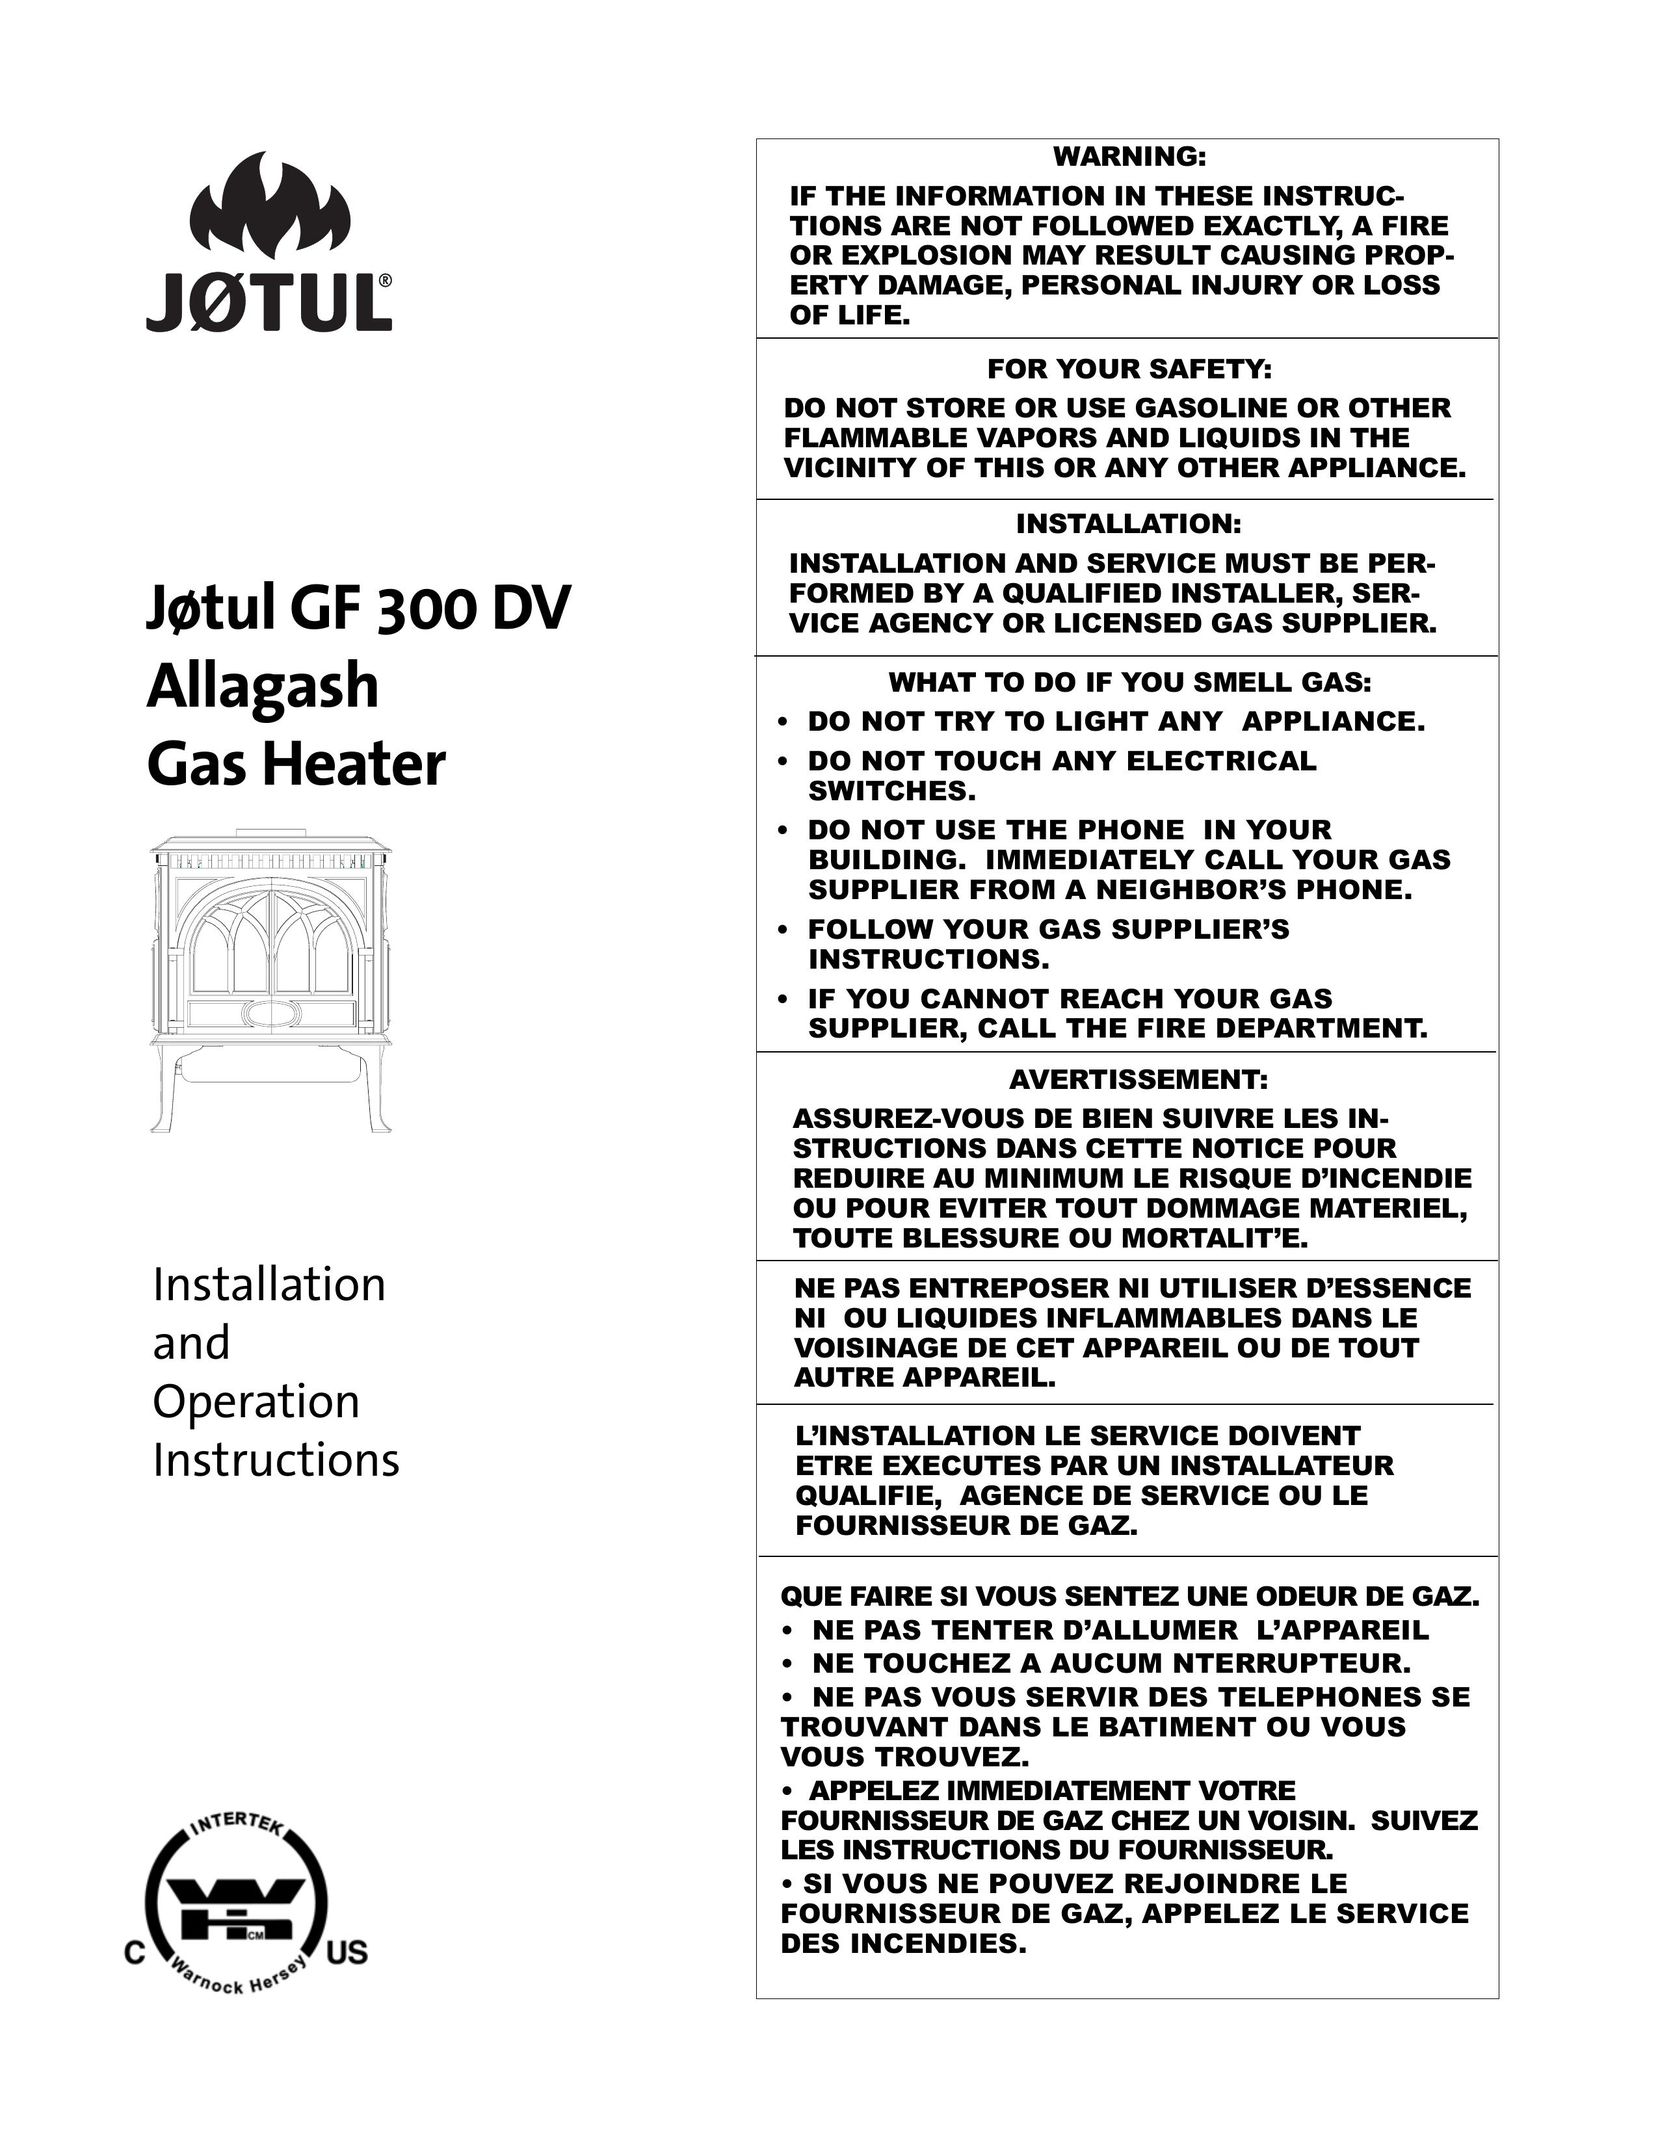 Jotul GF300 DV Stove User Manual